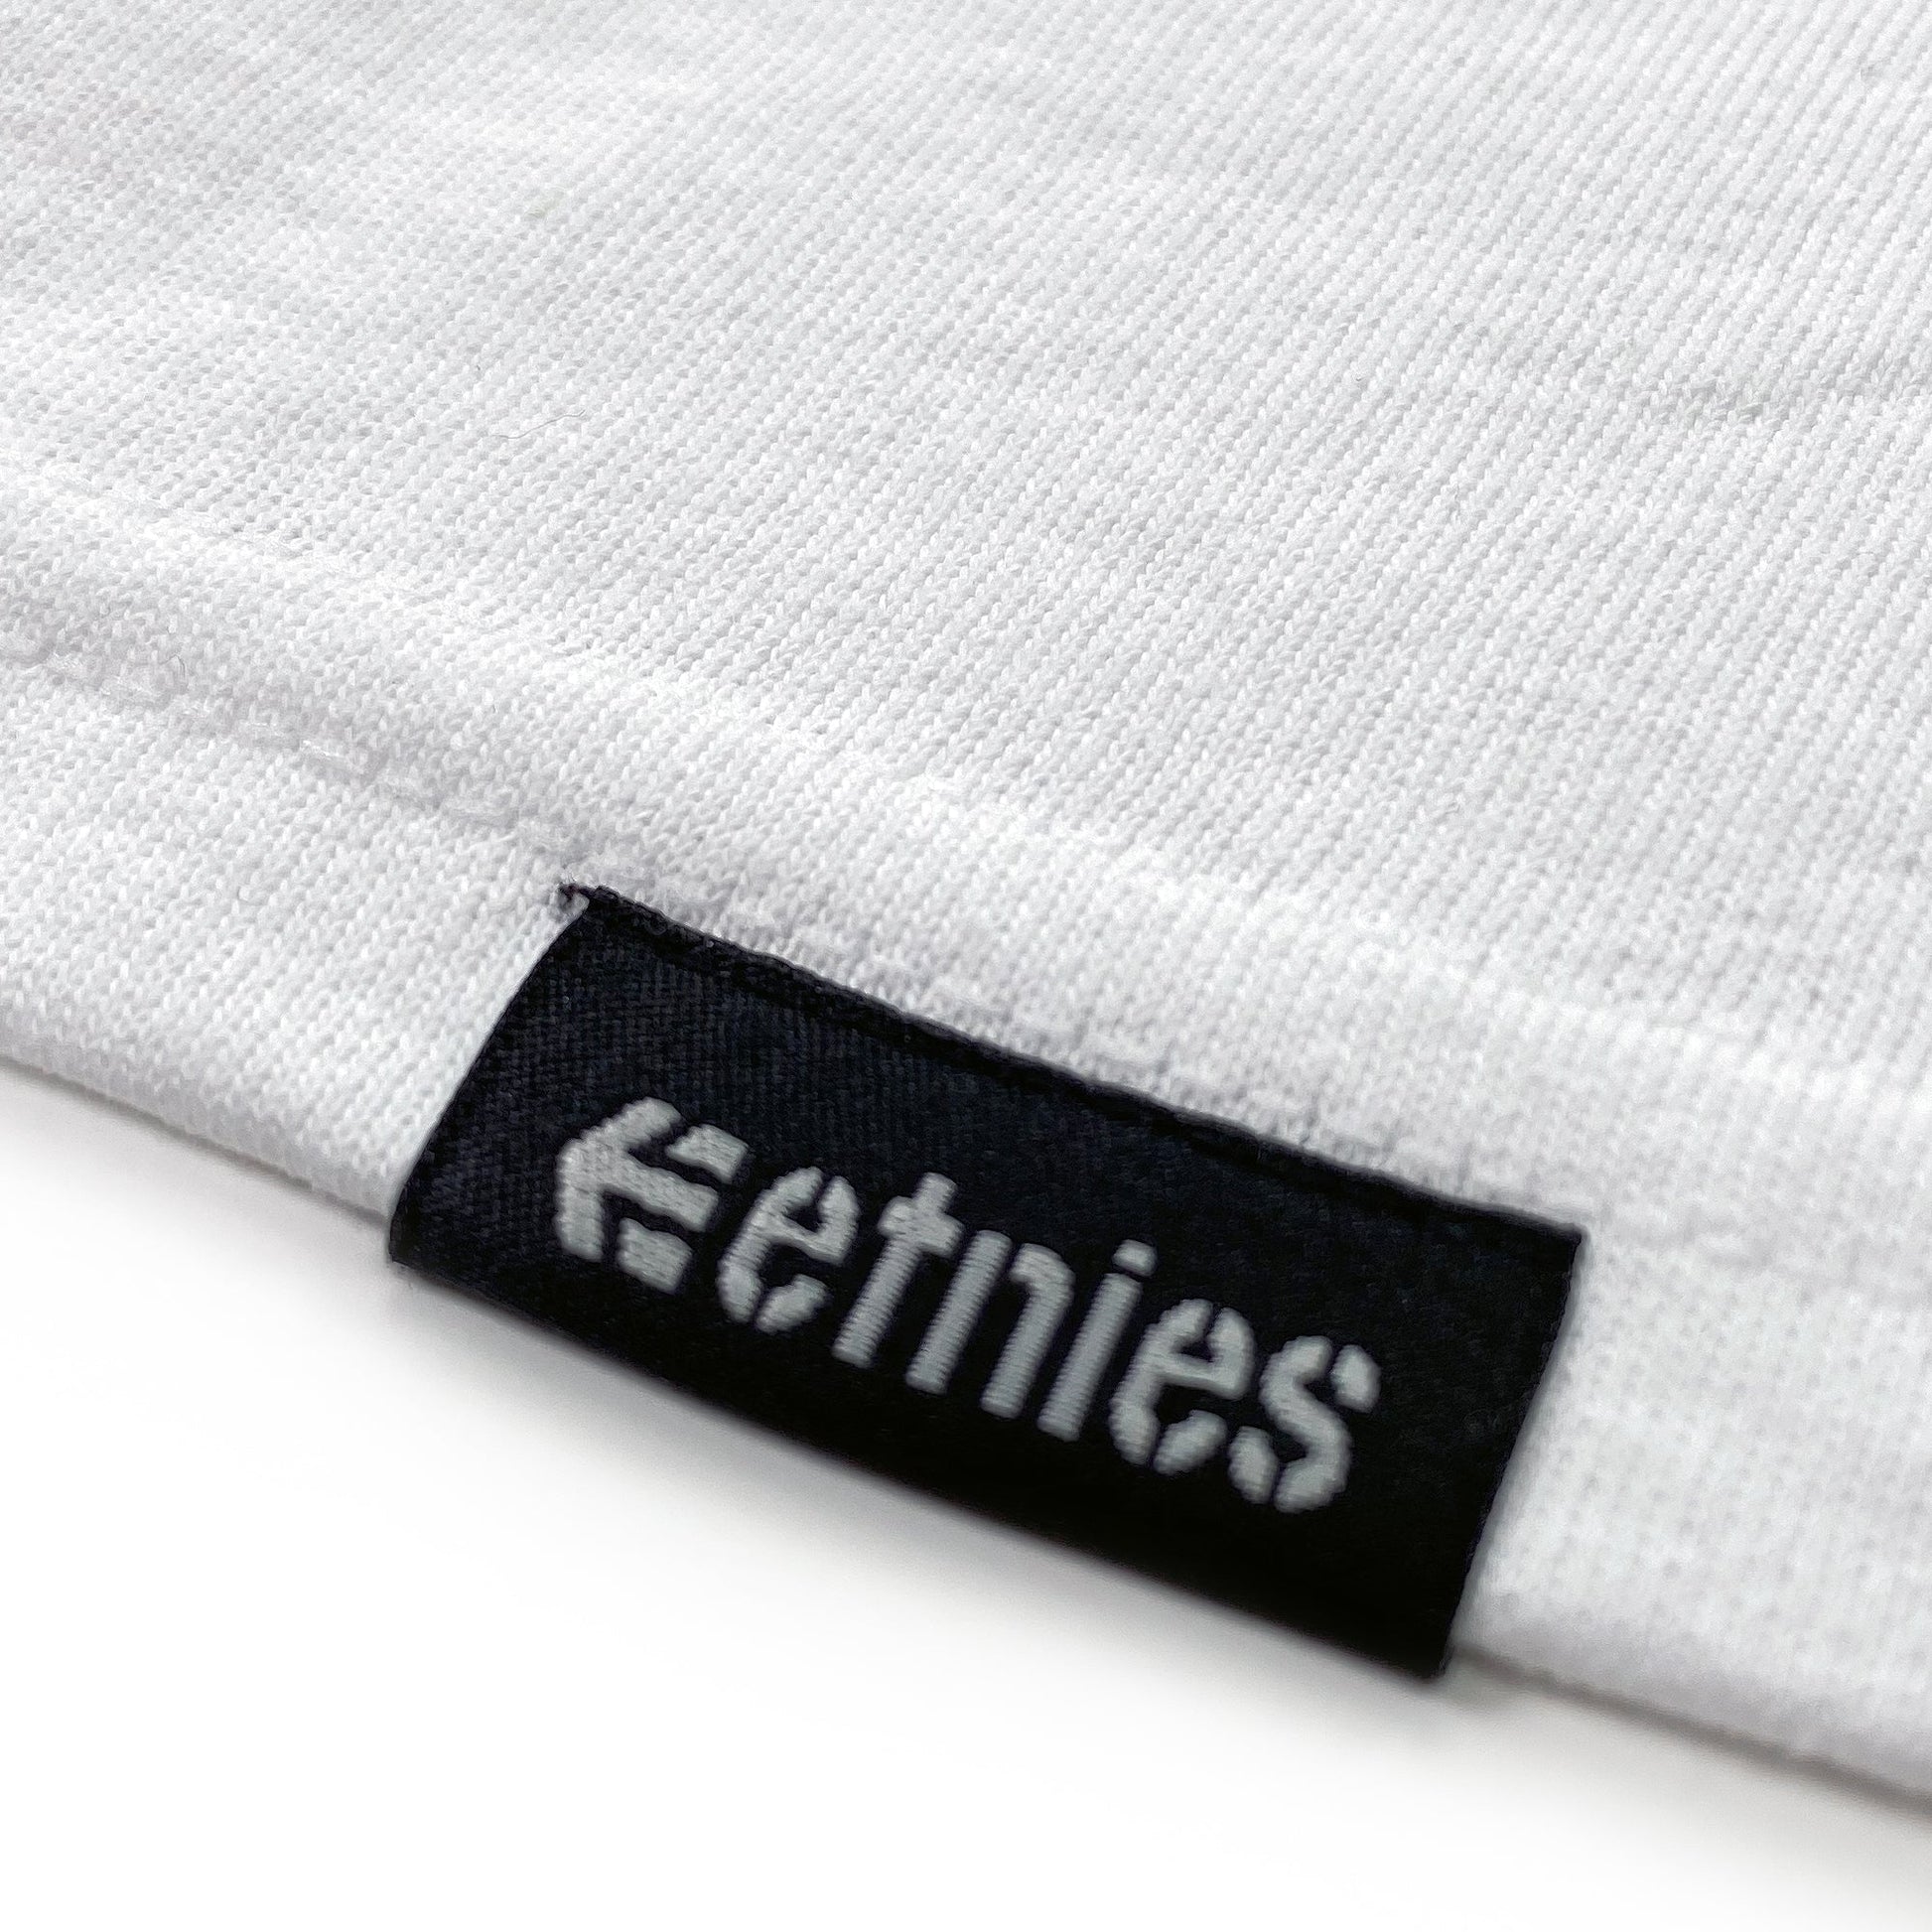 Etnies Deck Icon T-shirt - White - Prime Delux Store